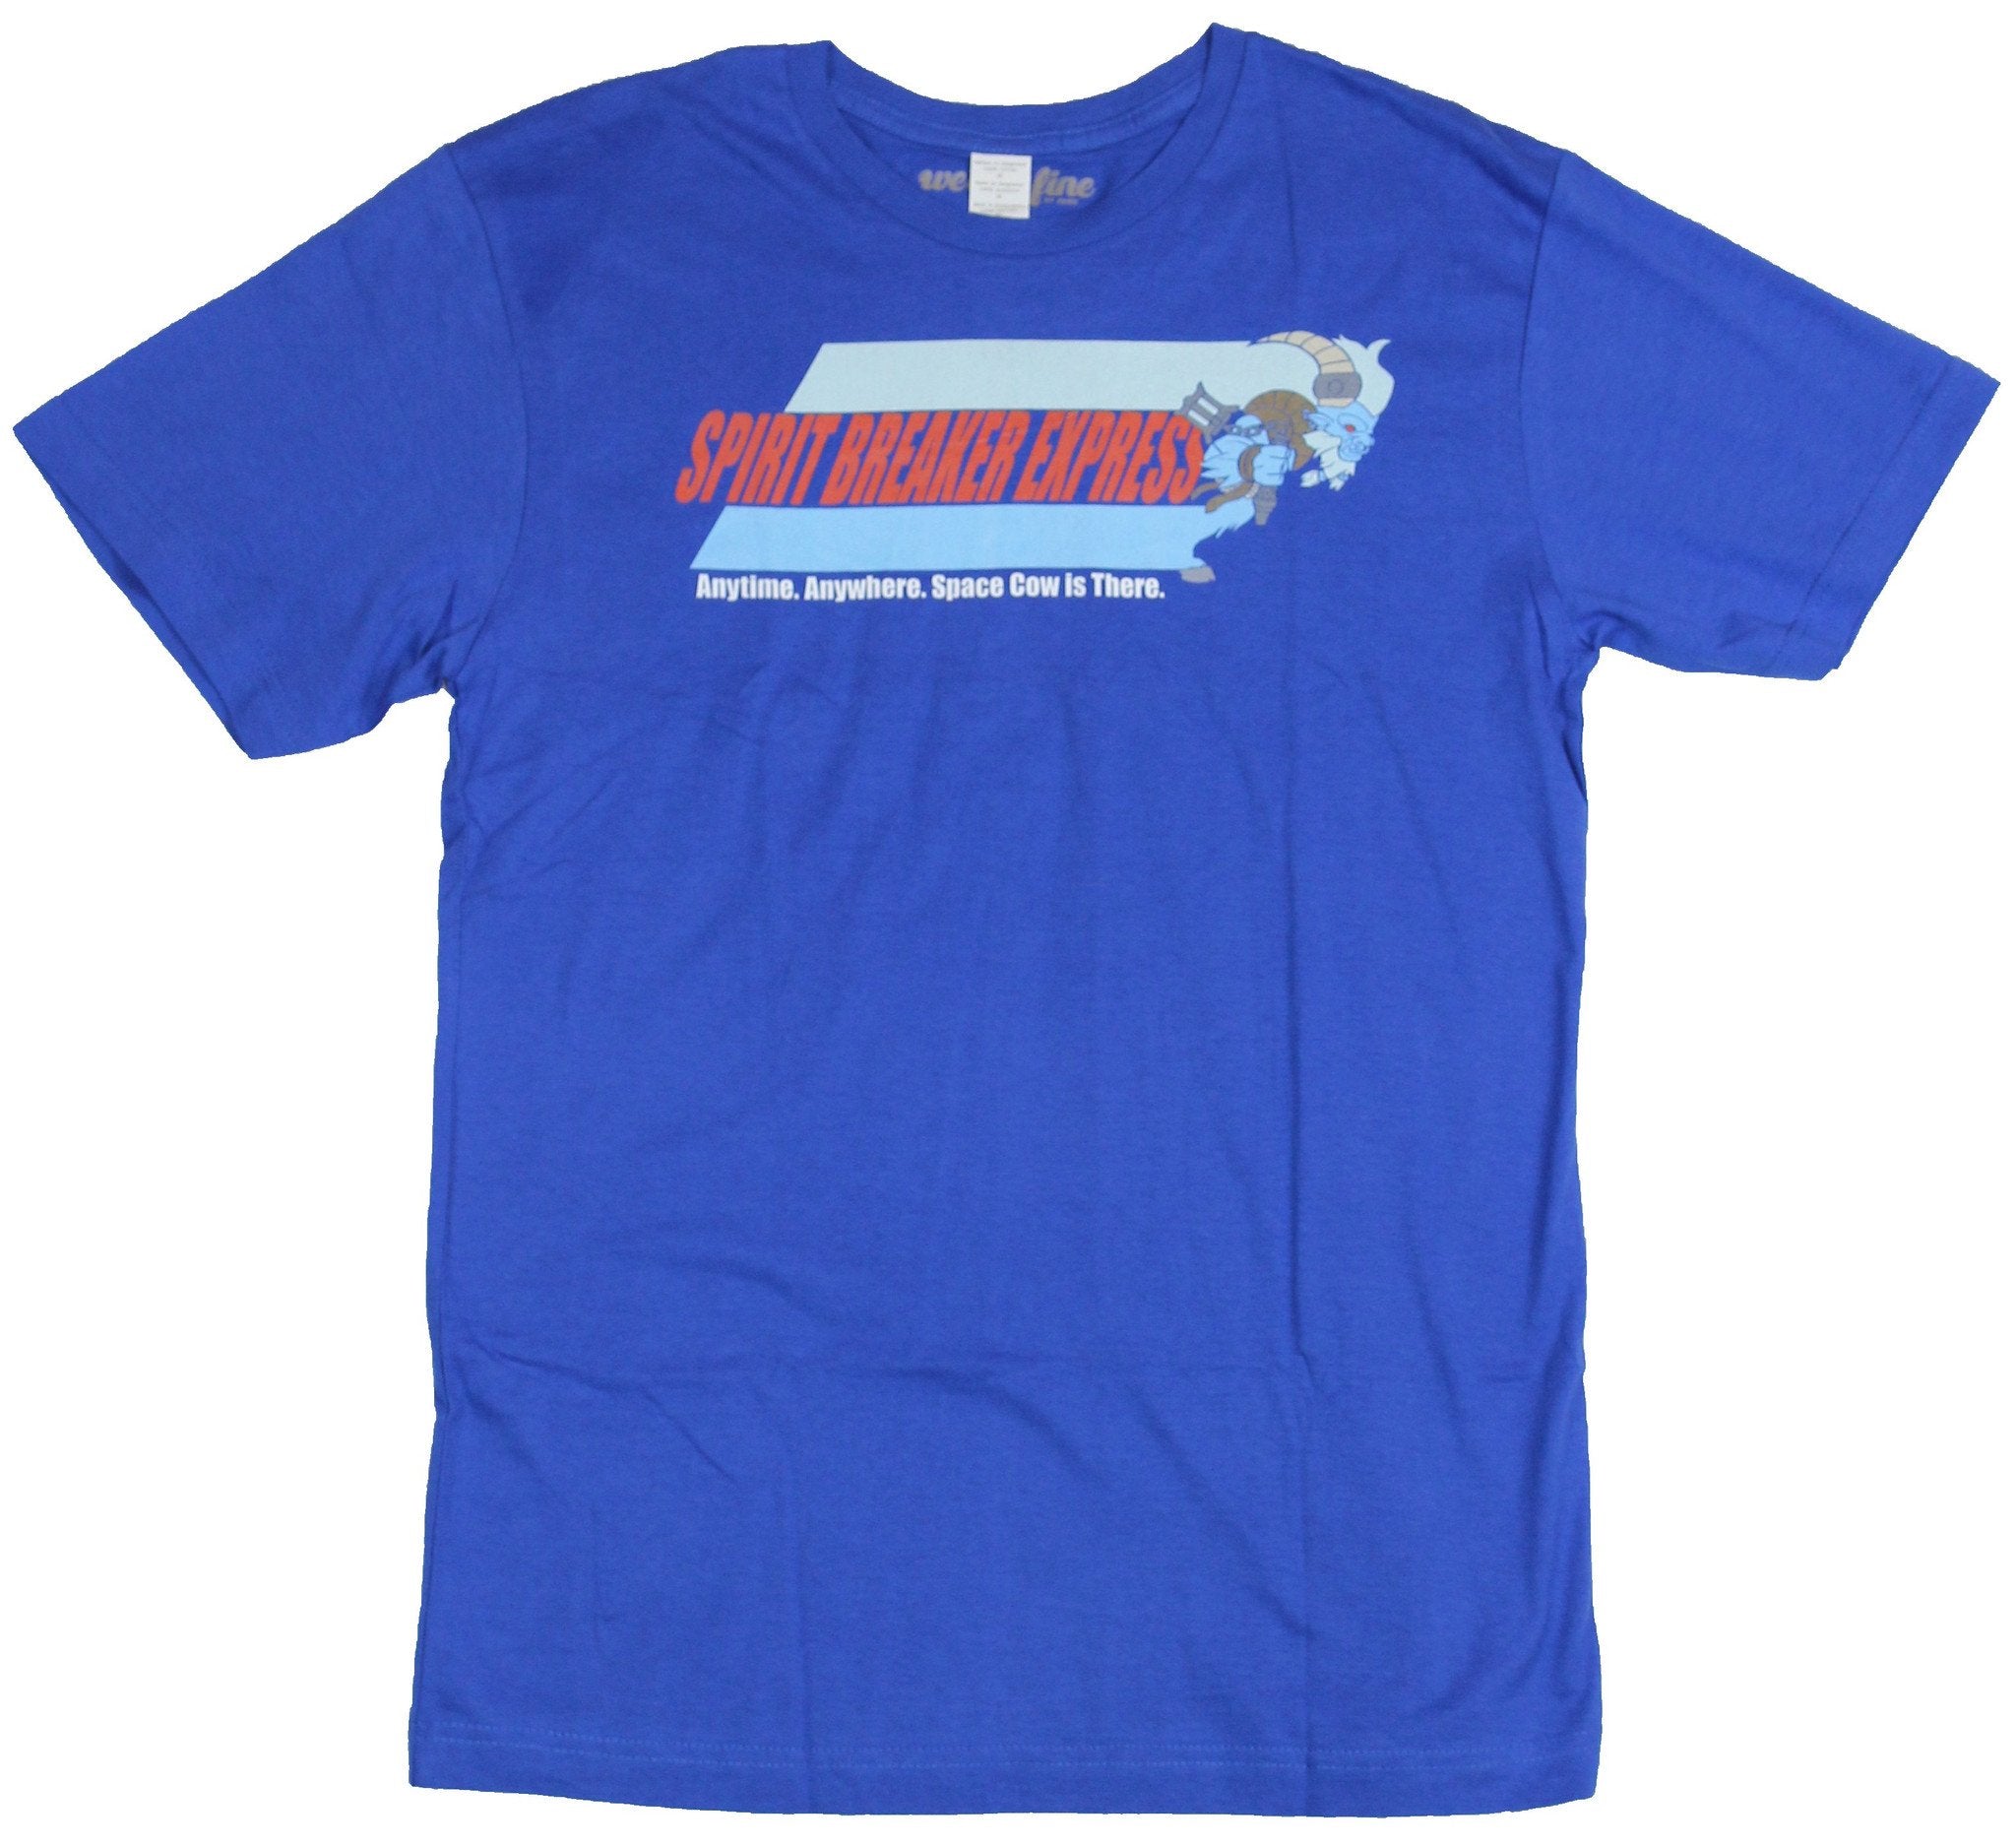 Dota 2 Mens T-Shirt - Spirit Breaker Express Name Logo